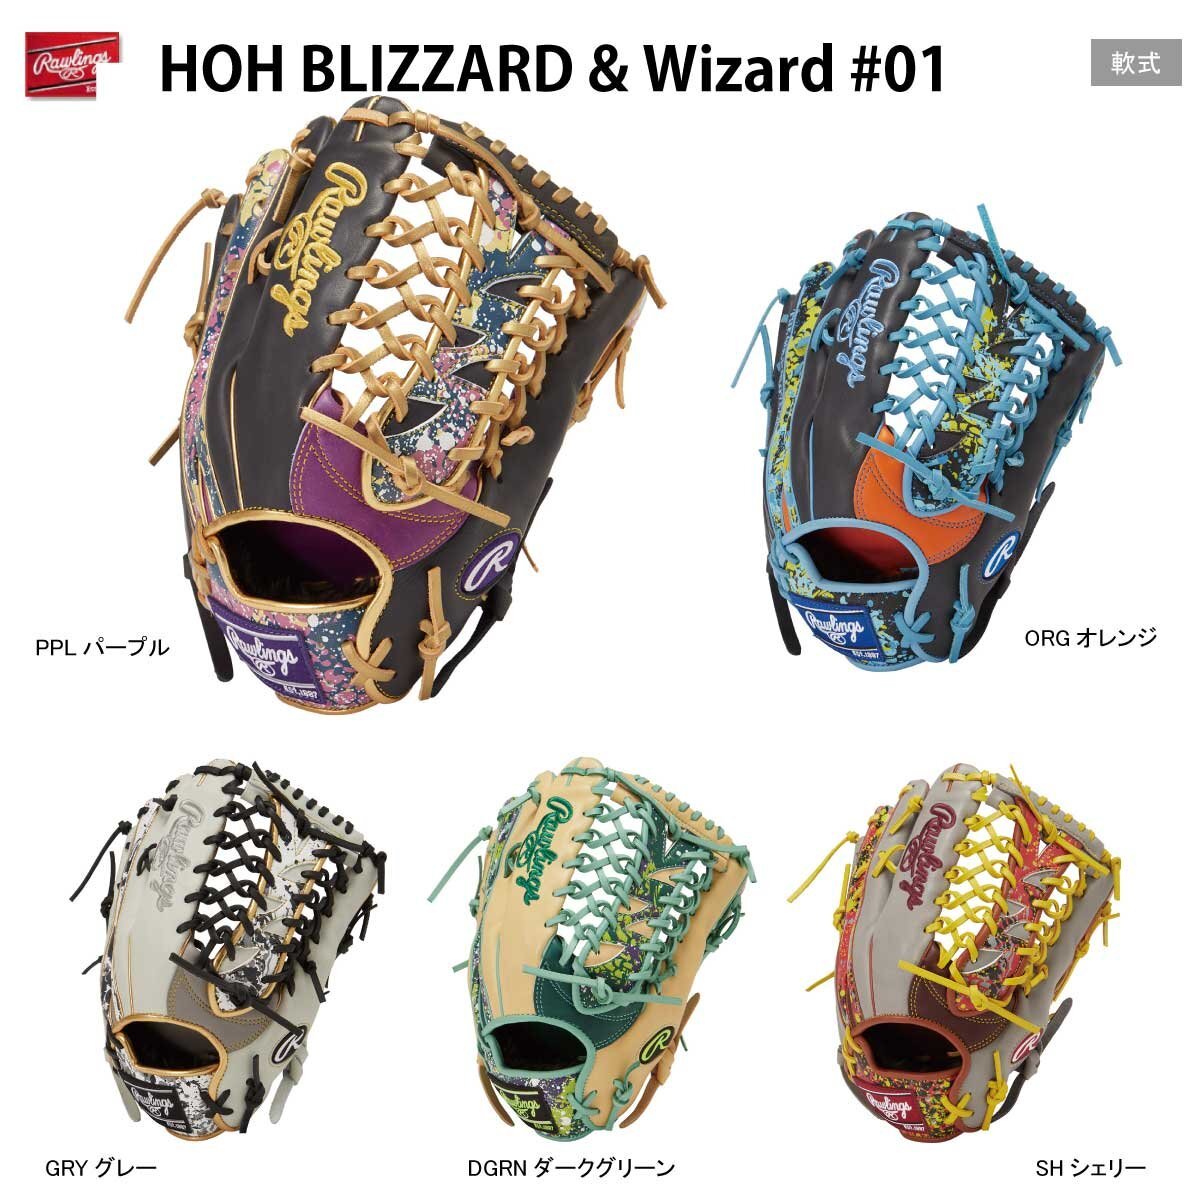 1445654-Rawlings/General Rubber Grab Hoh Blizzard Wizard Wizard Baseball Glove